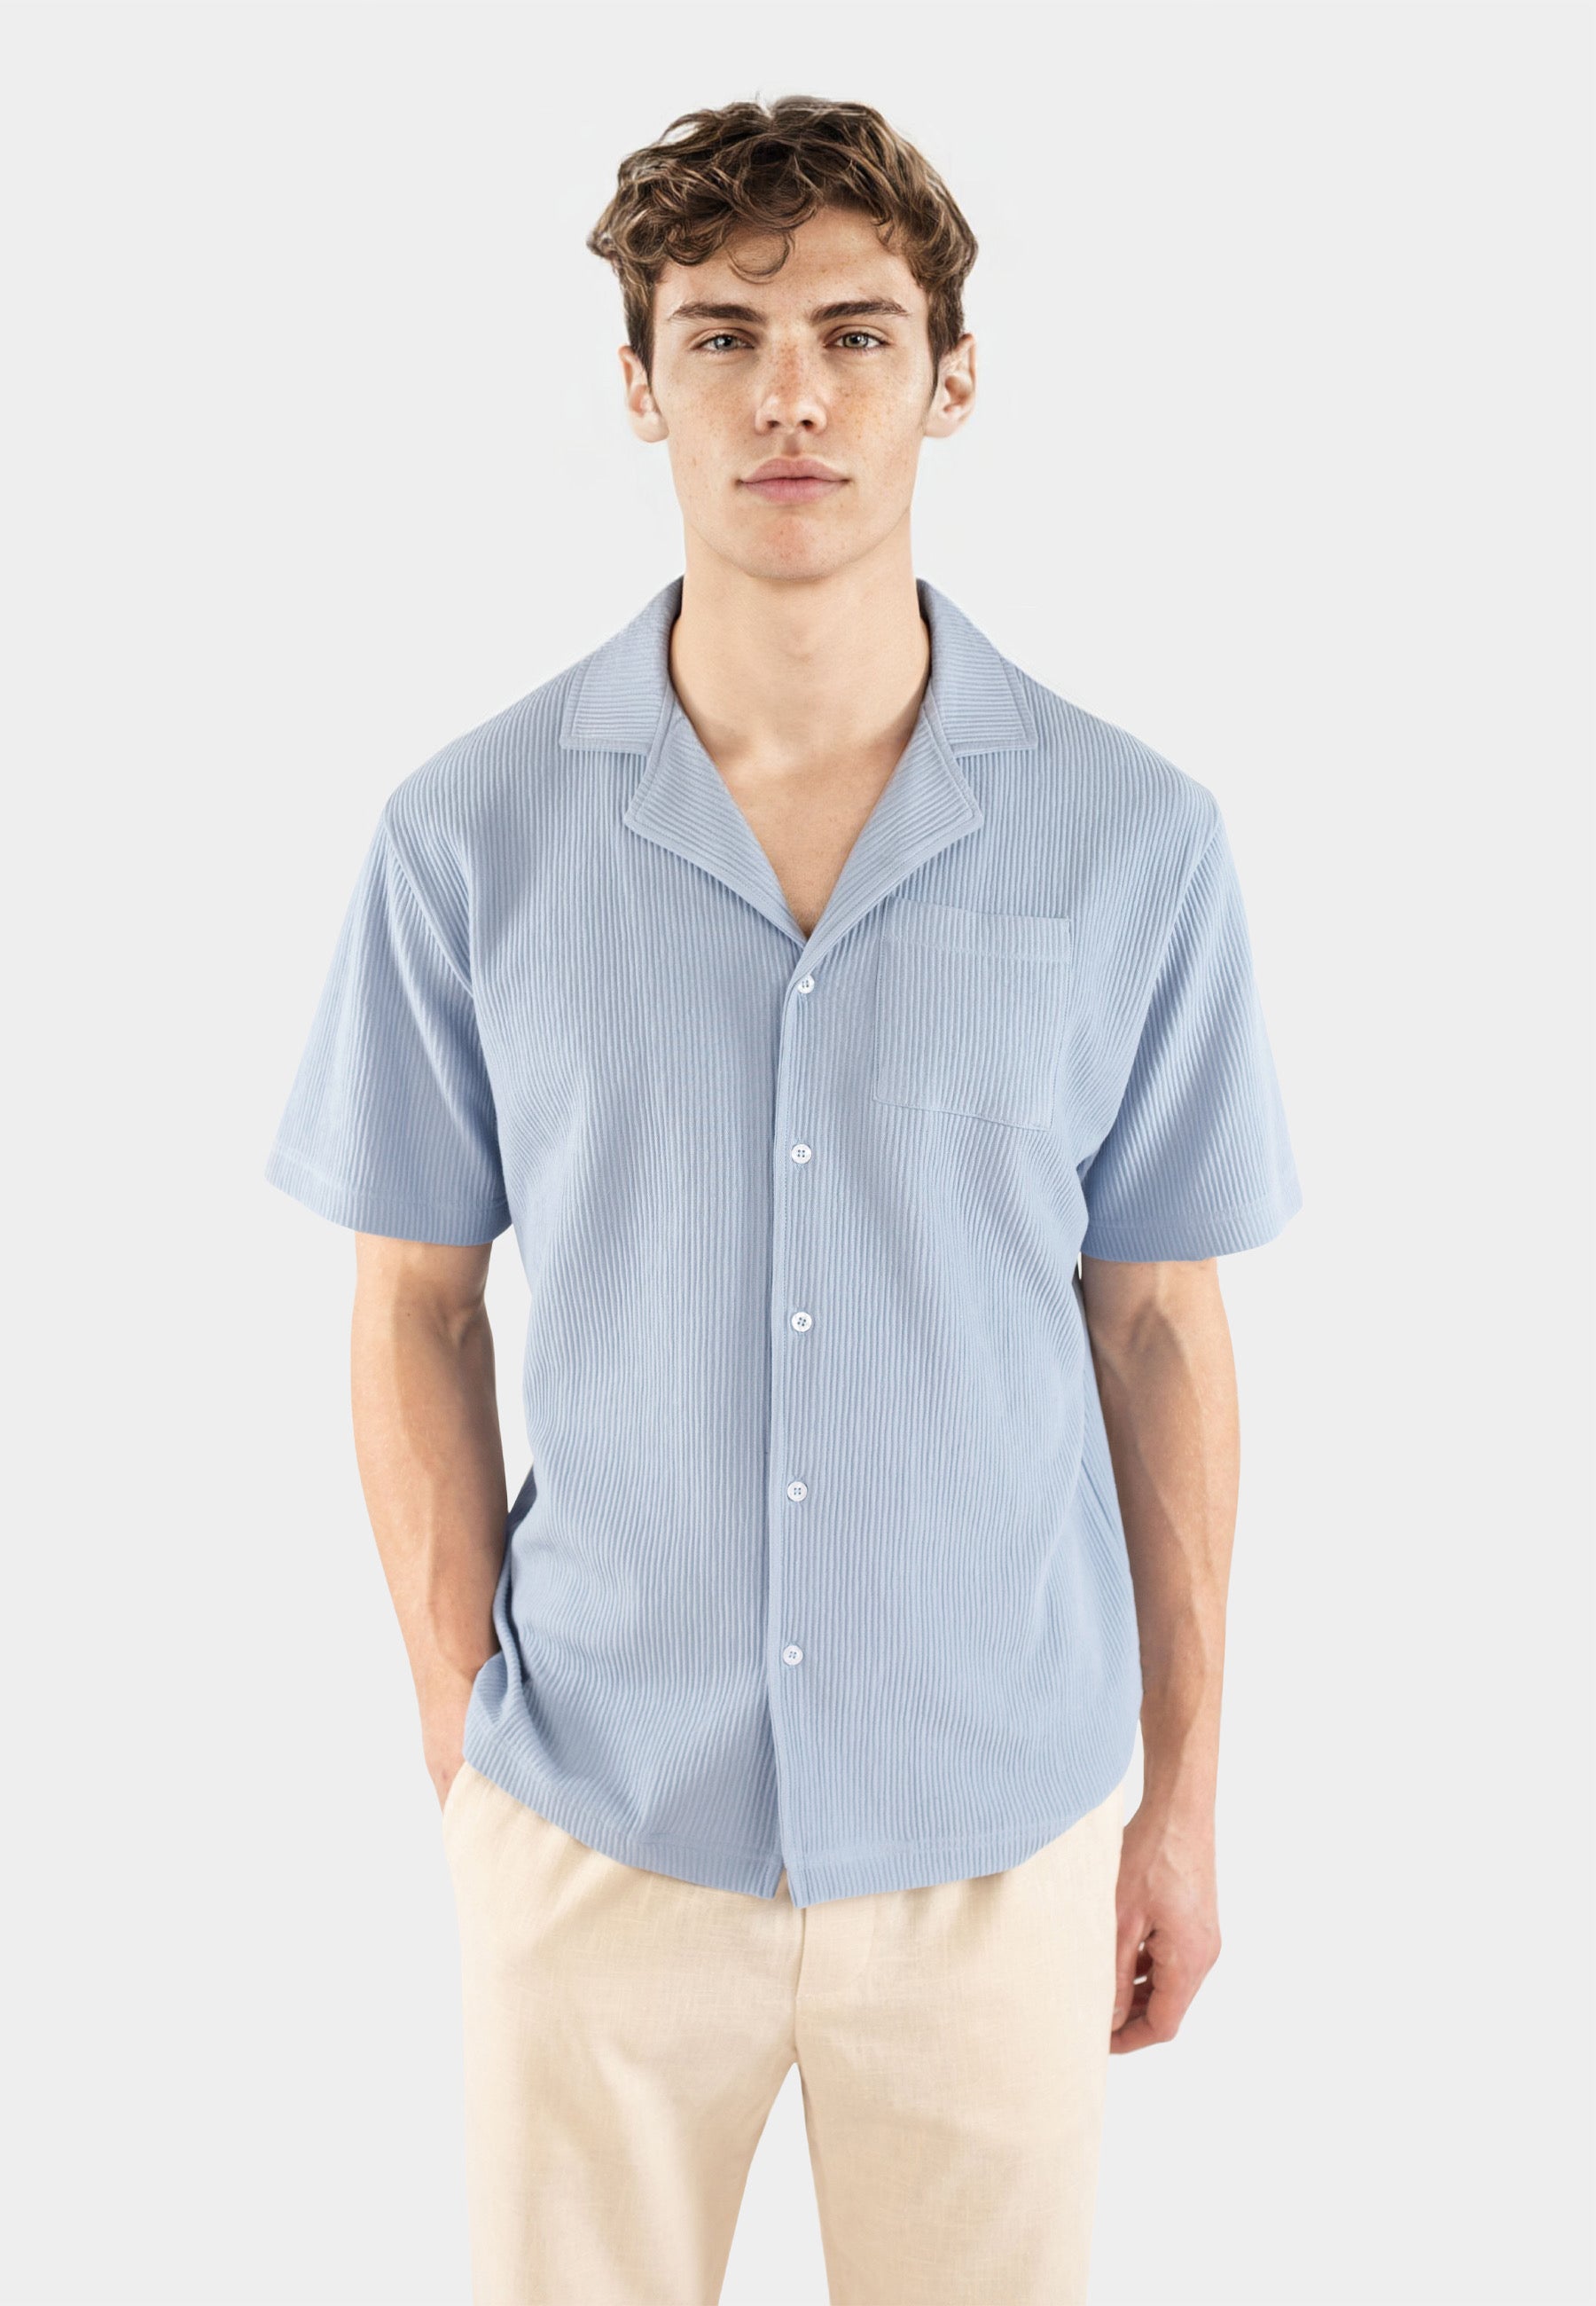 Jack plisséskjorta - Ljusblå 